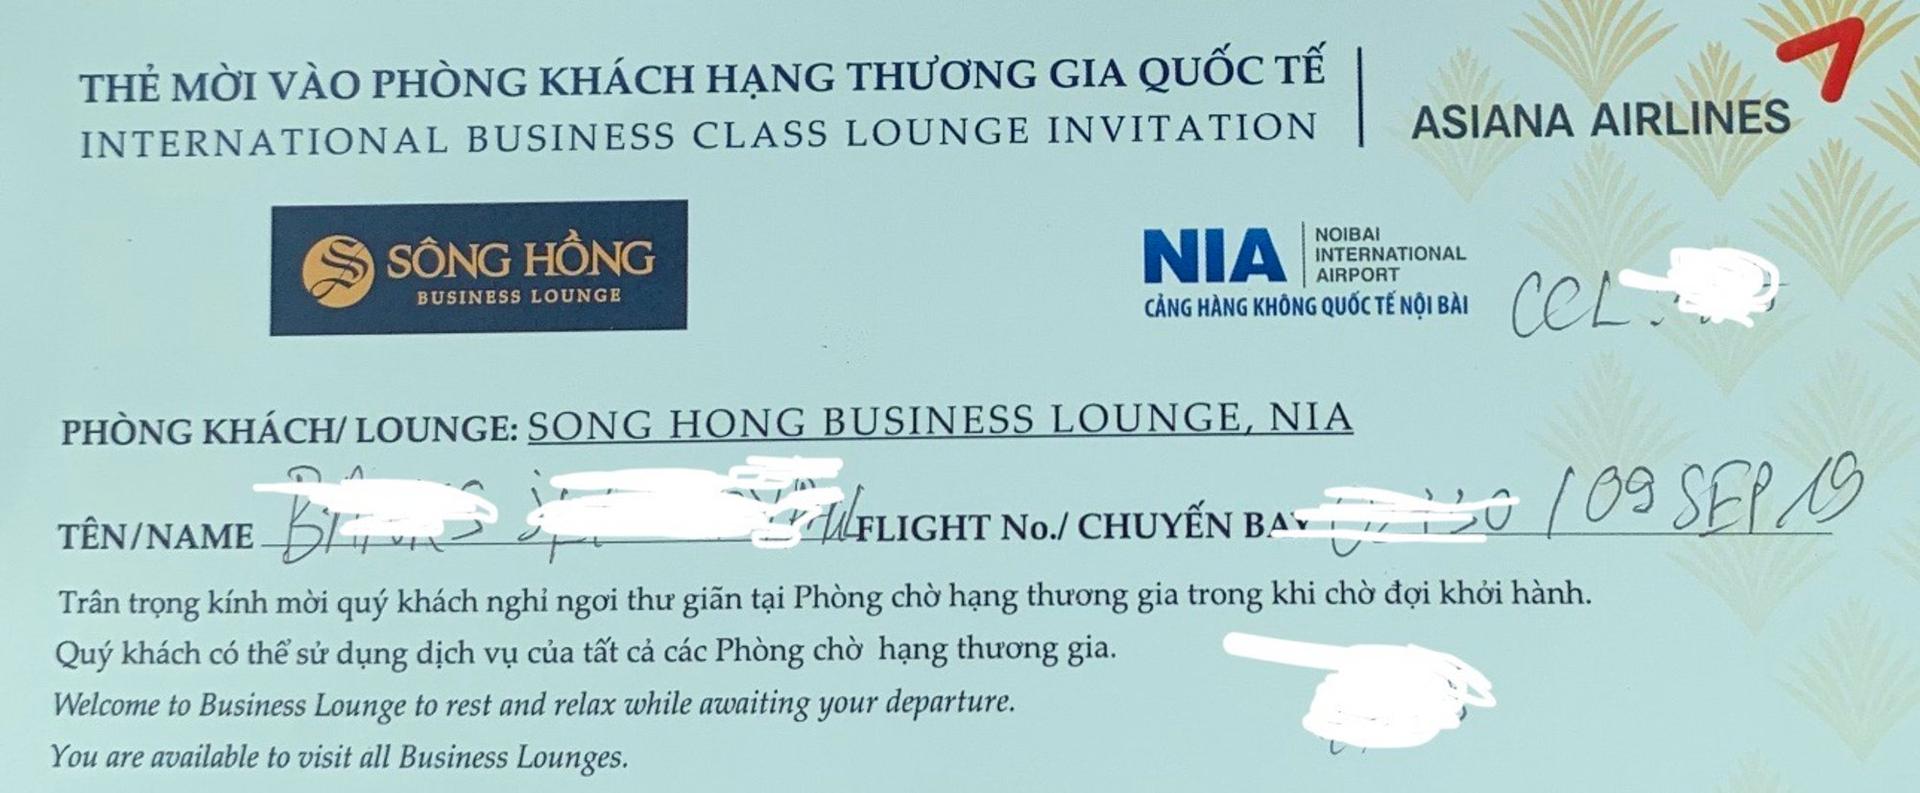 Noi Bai International Airport Business Lounge image 20 of 26